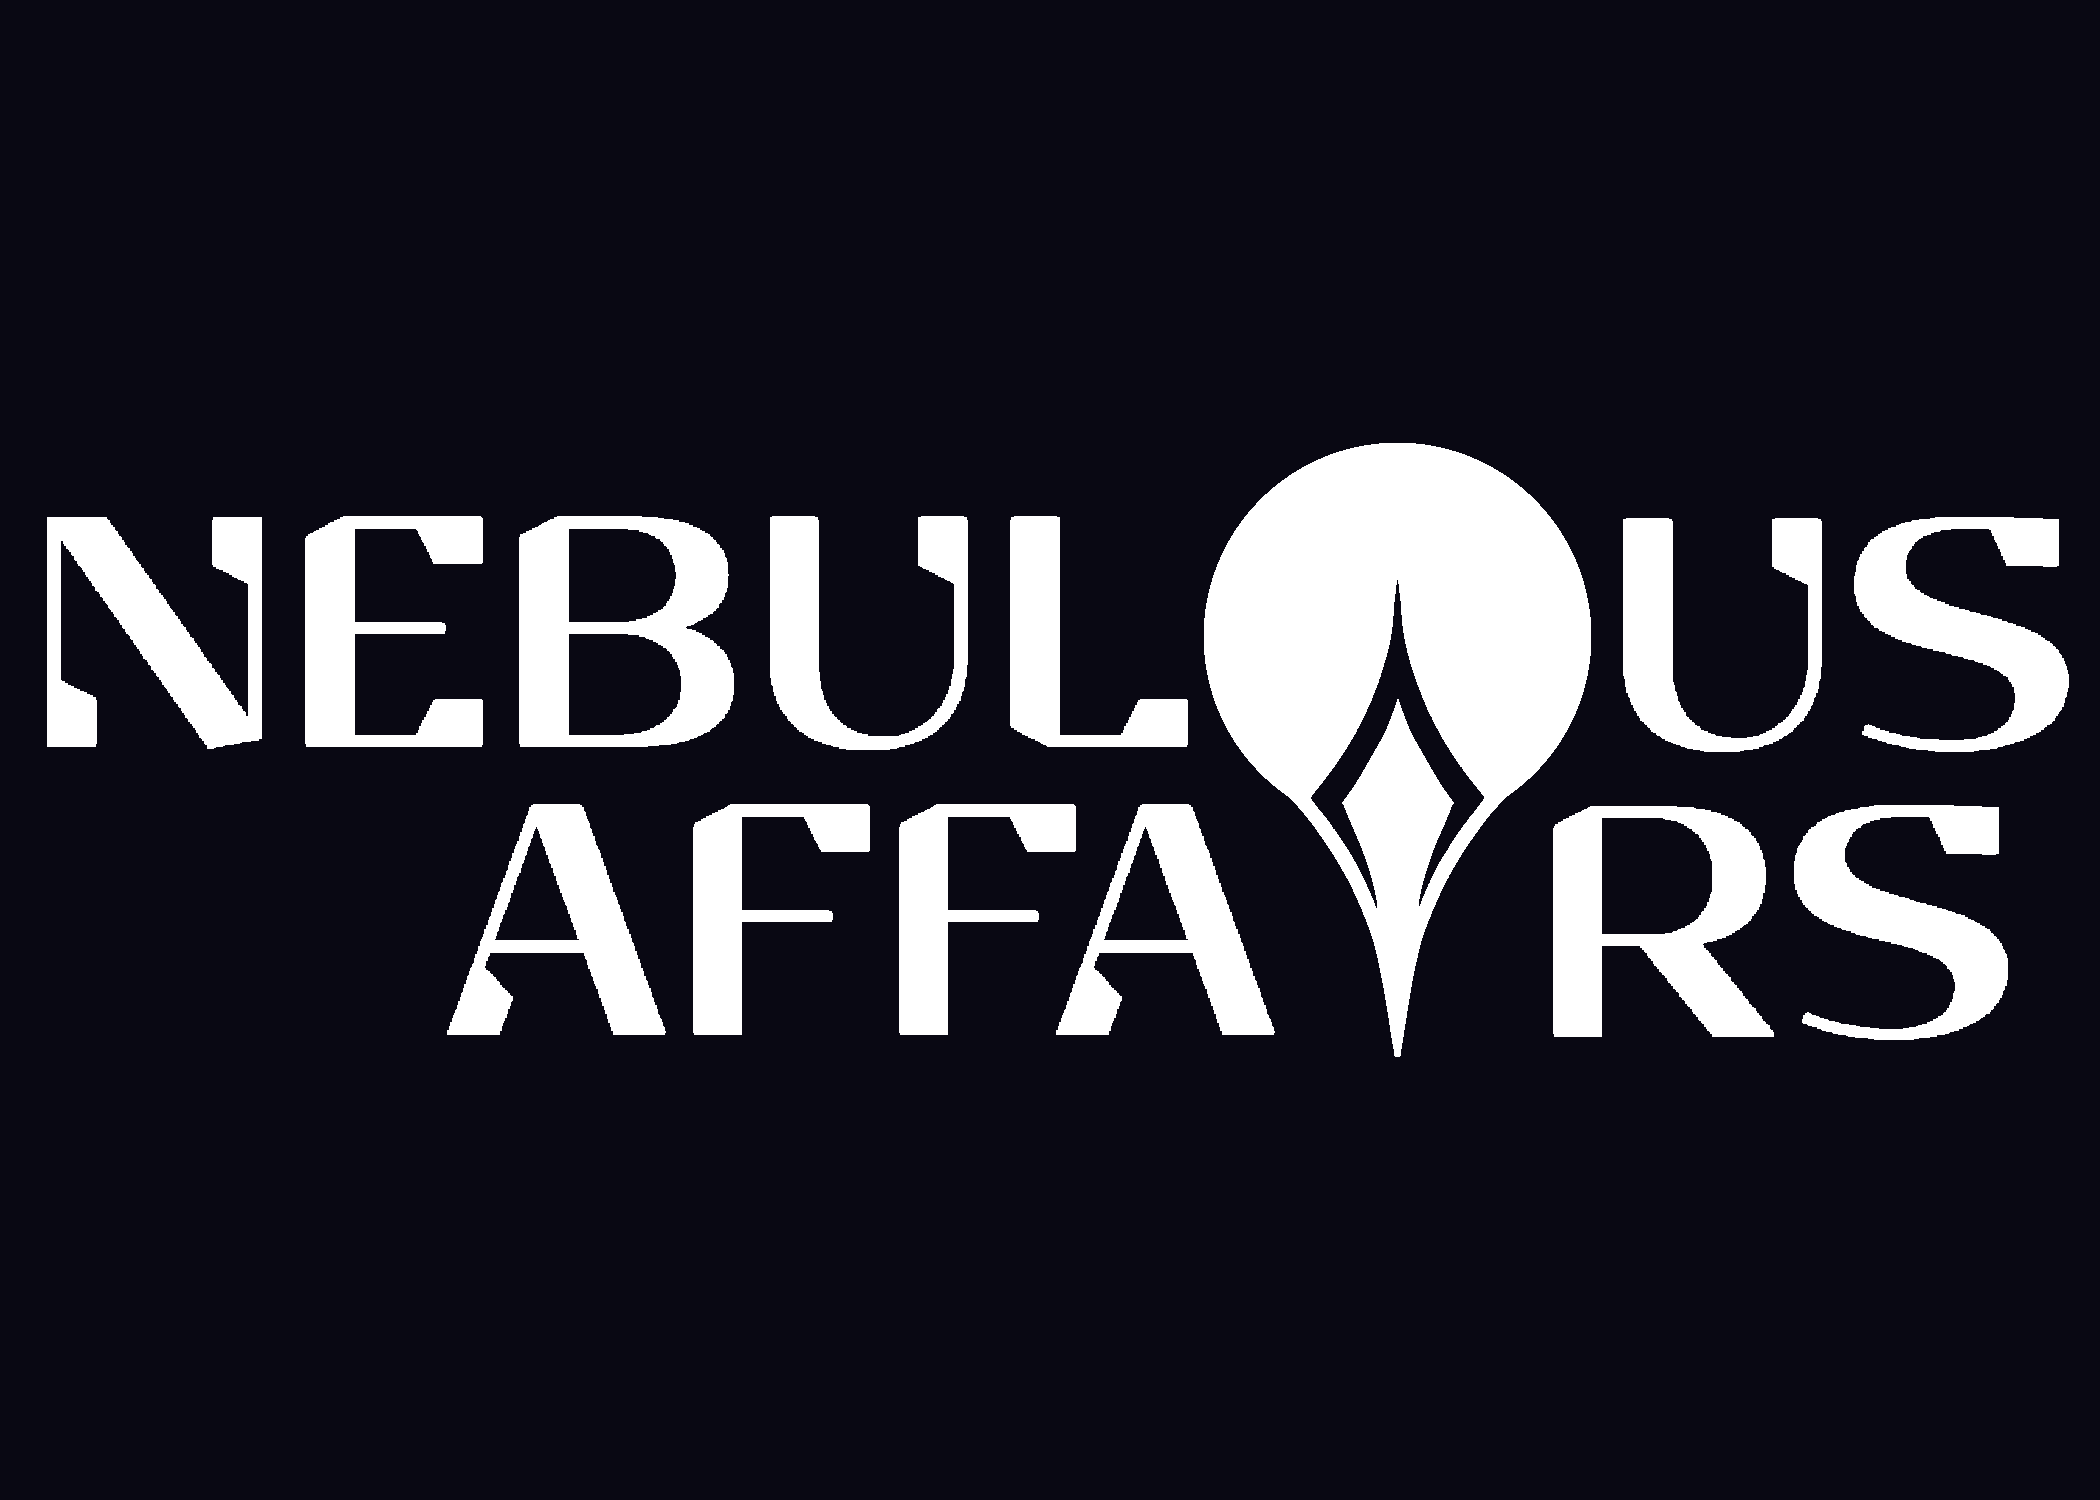 Nebulous Affairs